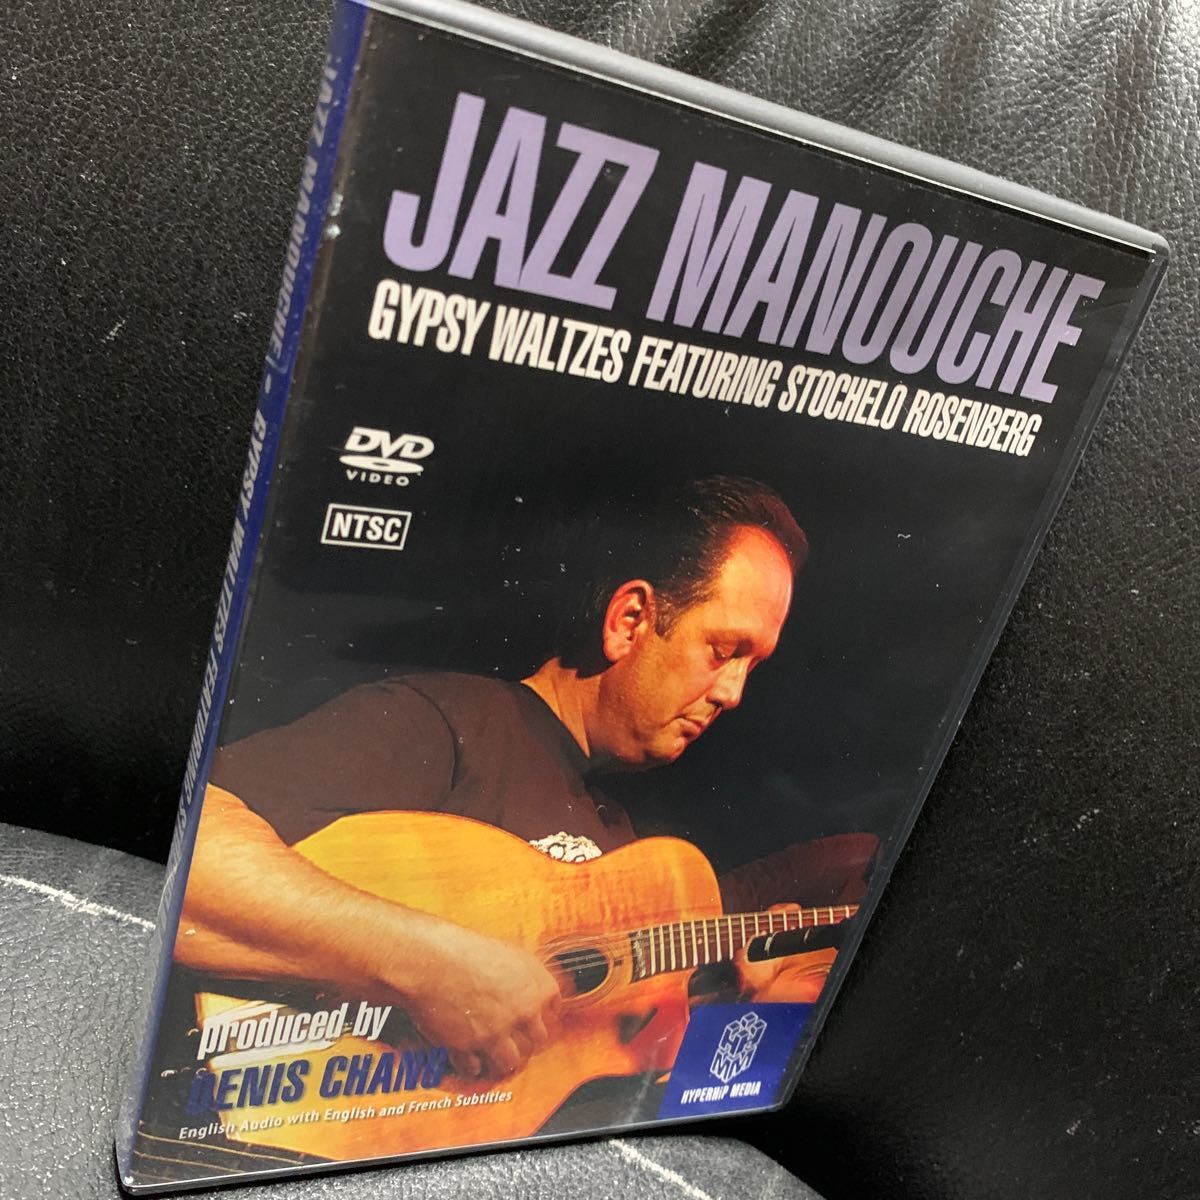 DVD JAZZ MANOUCHE Gypsy Waltzes featuring Stochelo Rosenberg ストーケロローゼンバーグトリオ ジプシースウィングマヌーシュギター_画像1